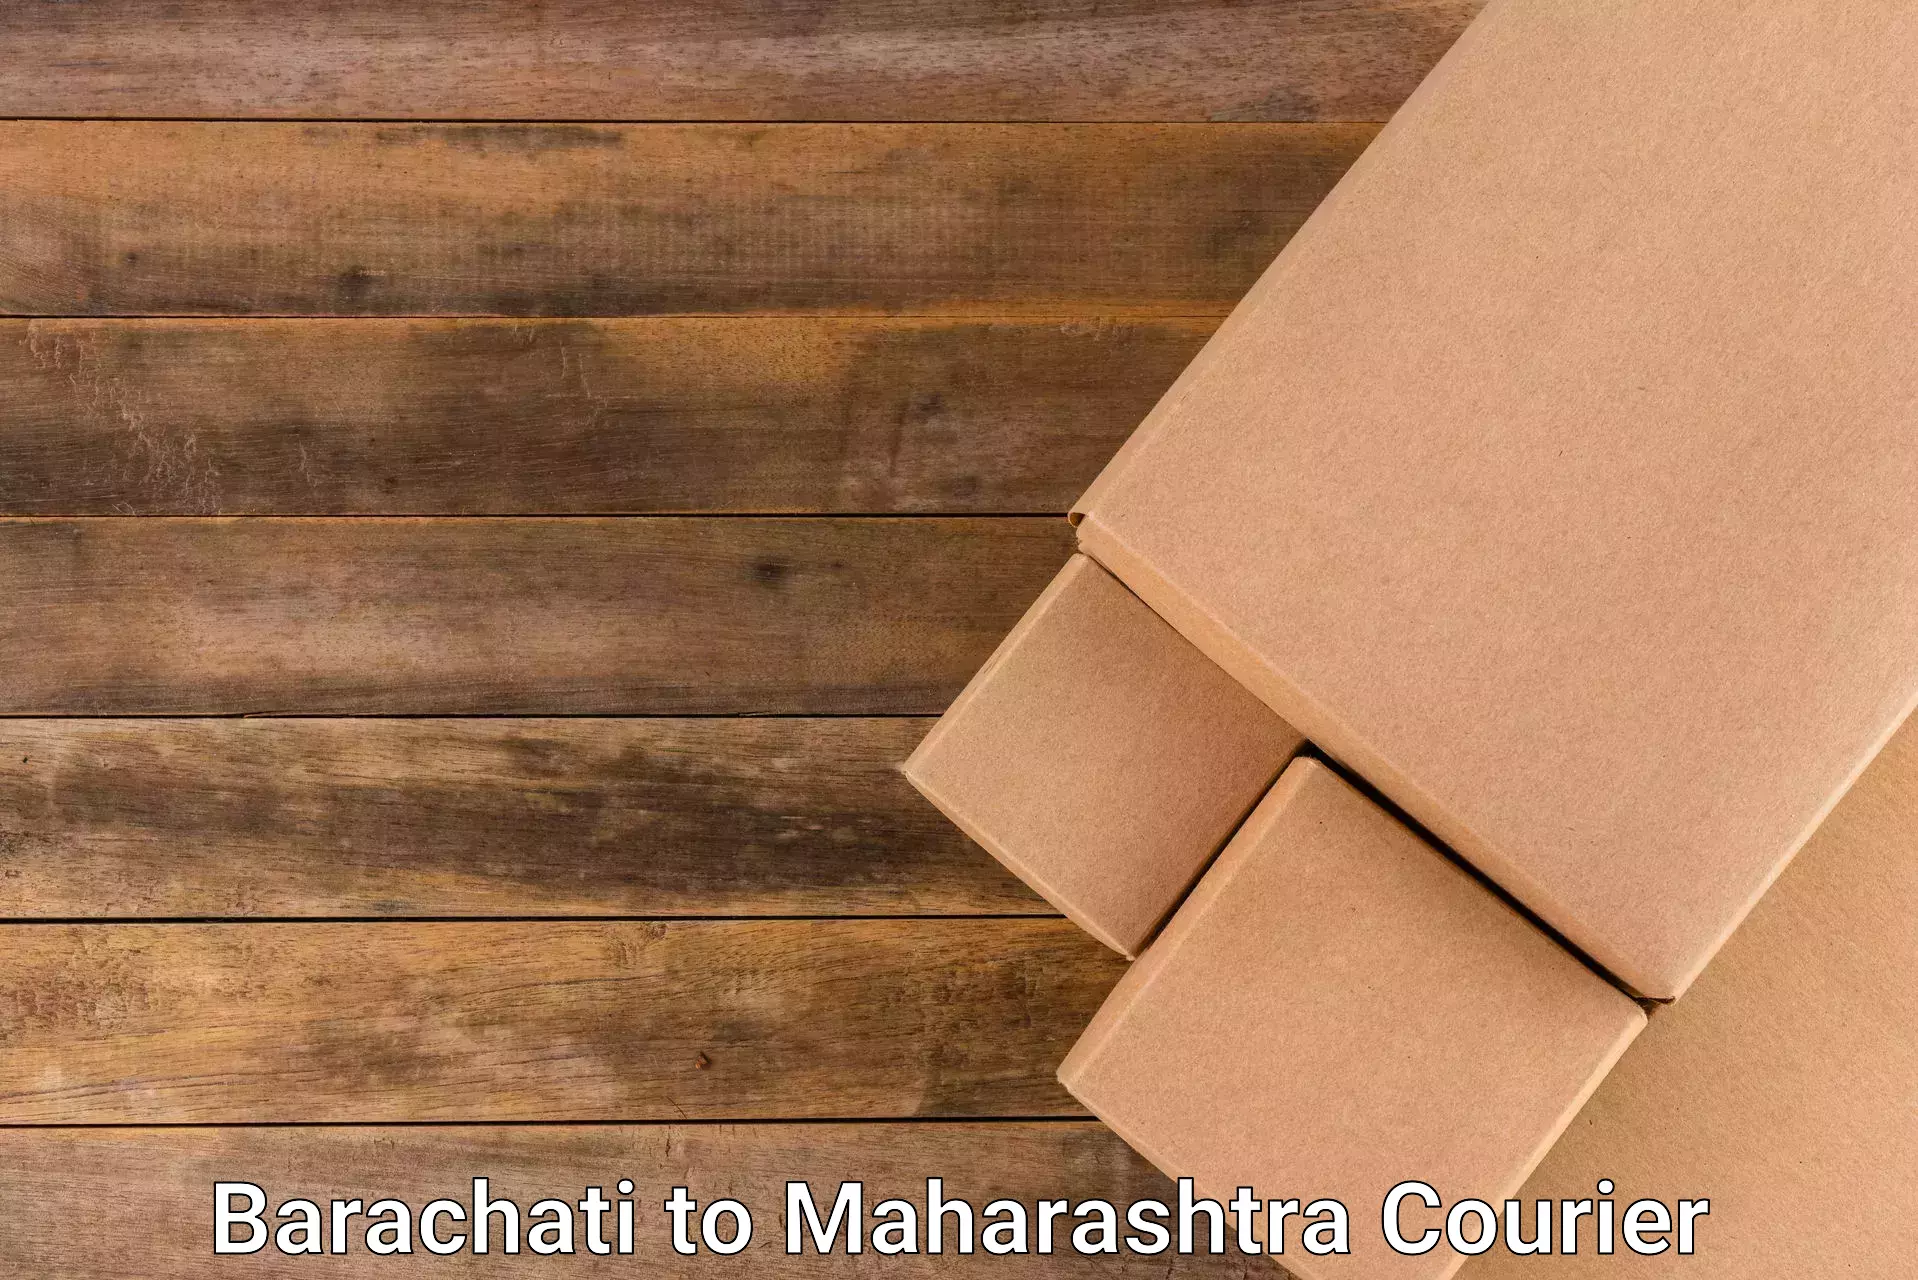 Full-service courier options Barachati to Maharashtra